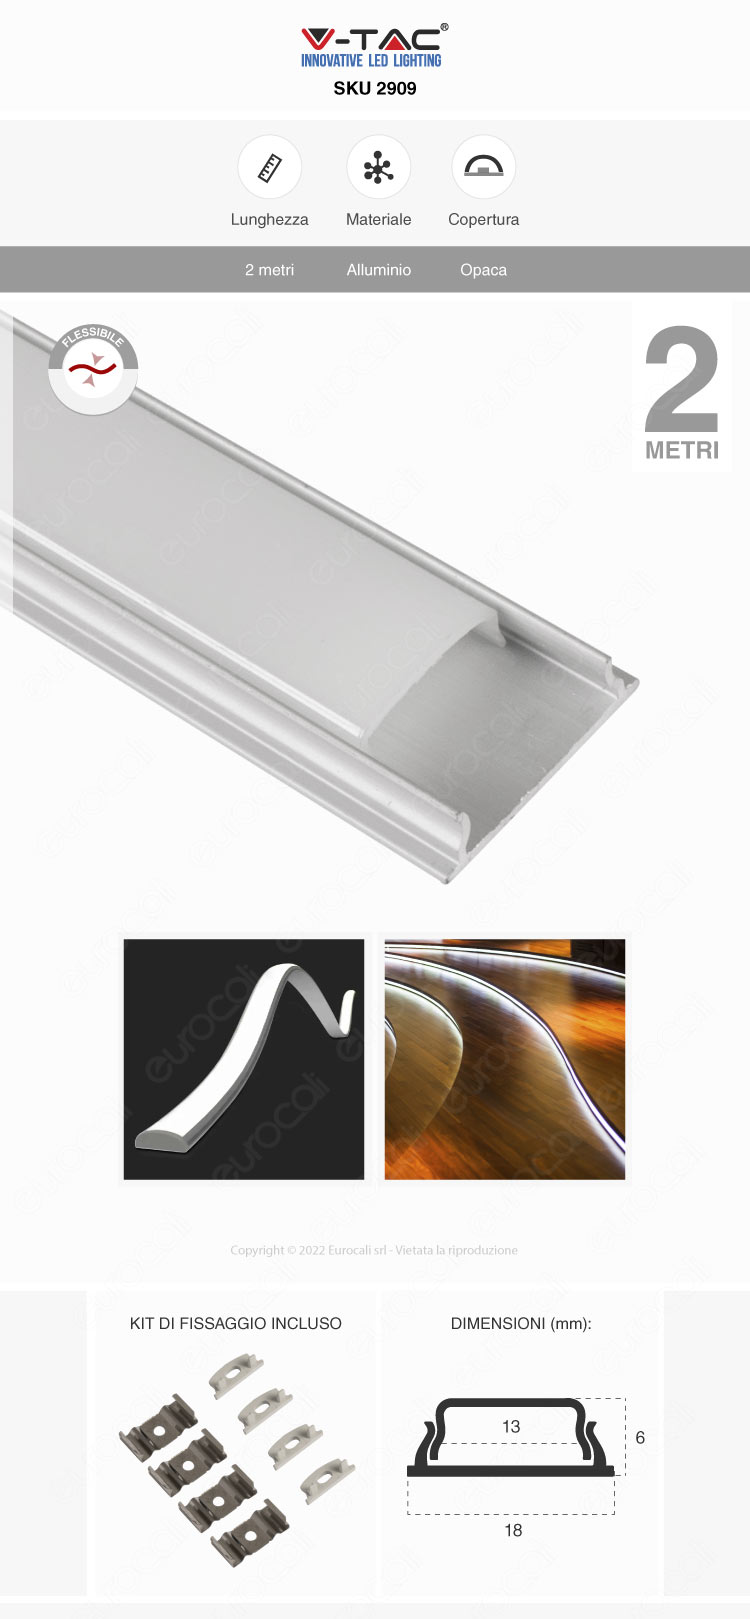 v-tac vt-8138 profilo flessibile strisce led alluminio bianco 2m